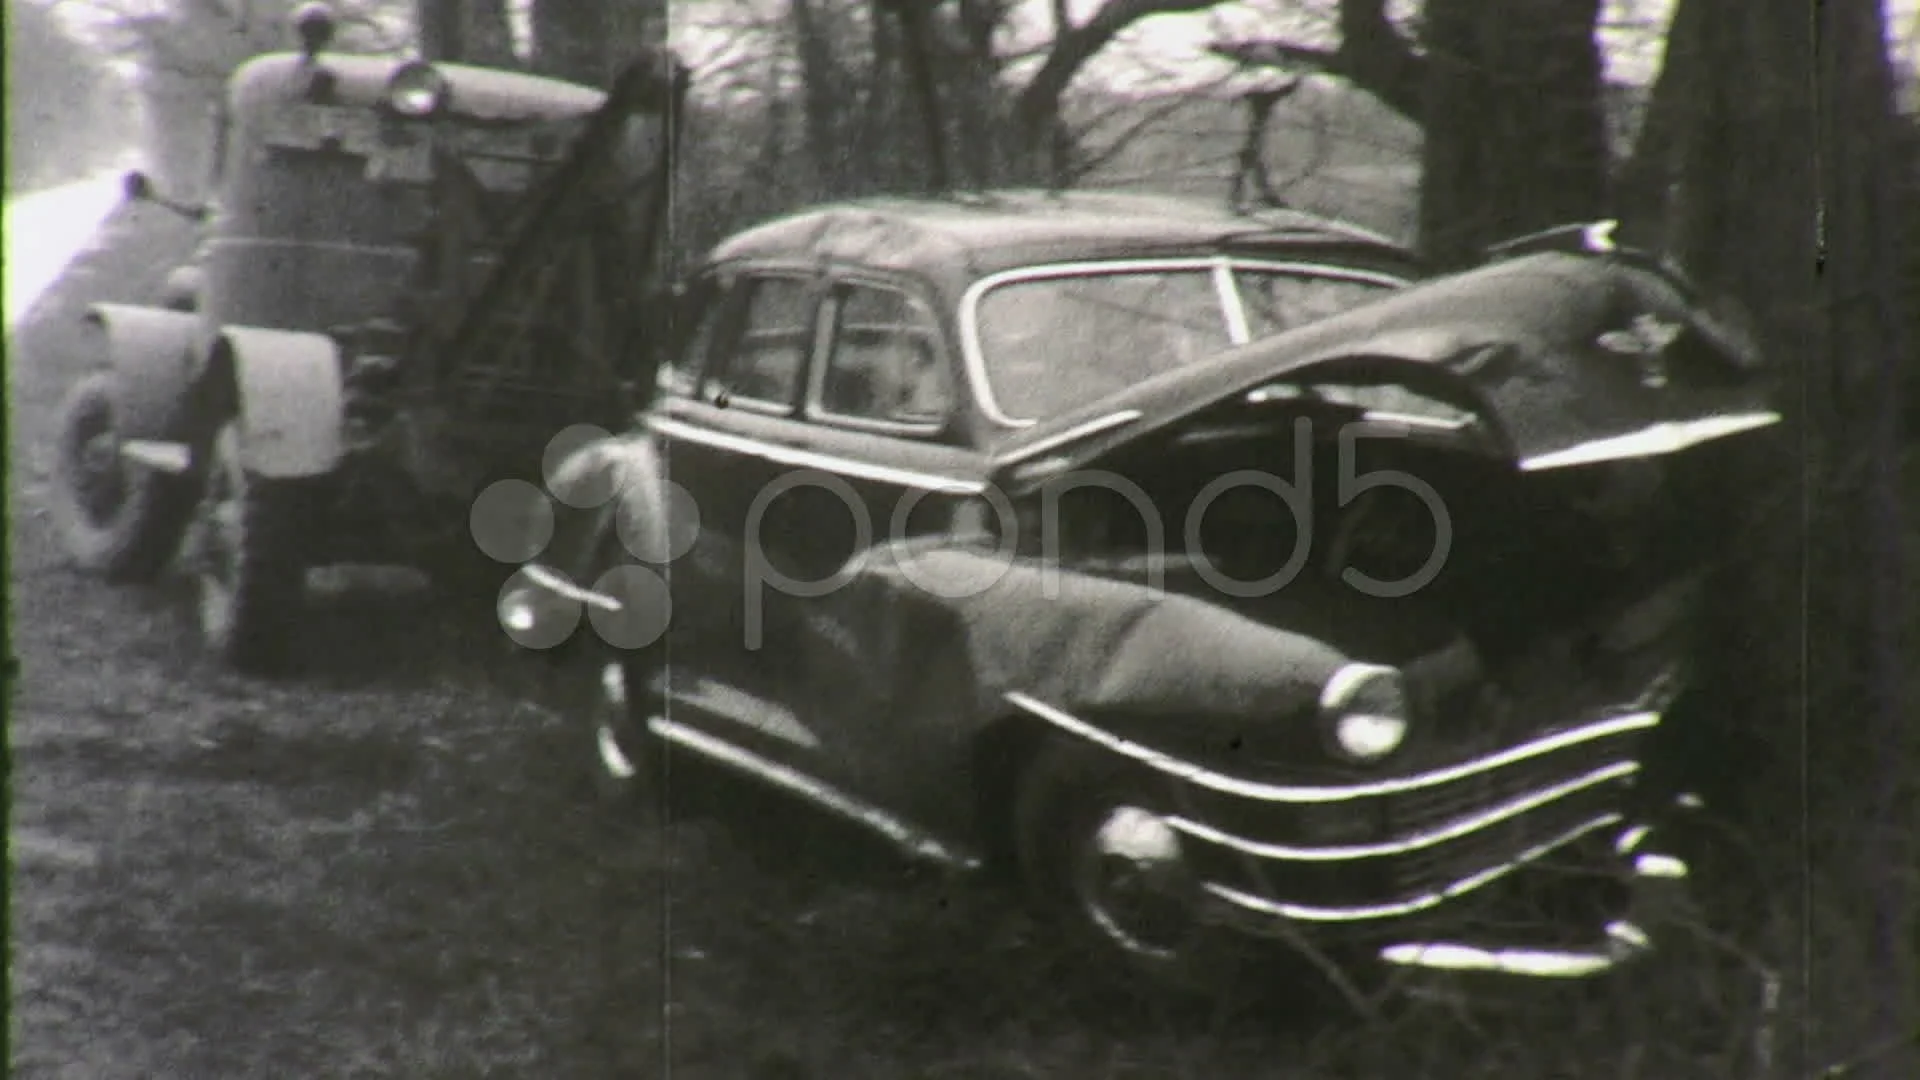  Crash footage antique car with Original Part